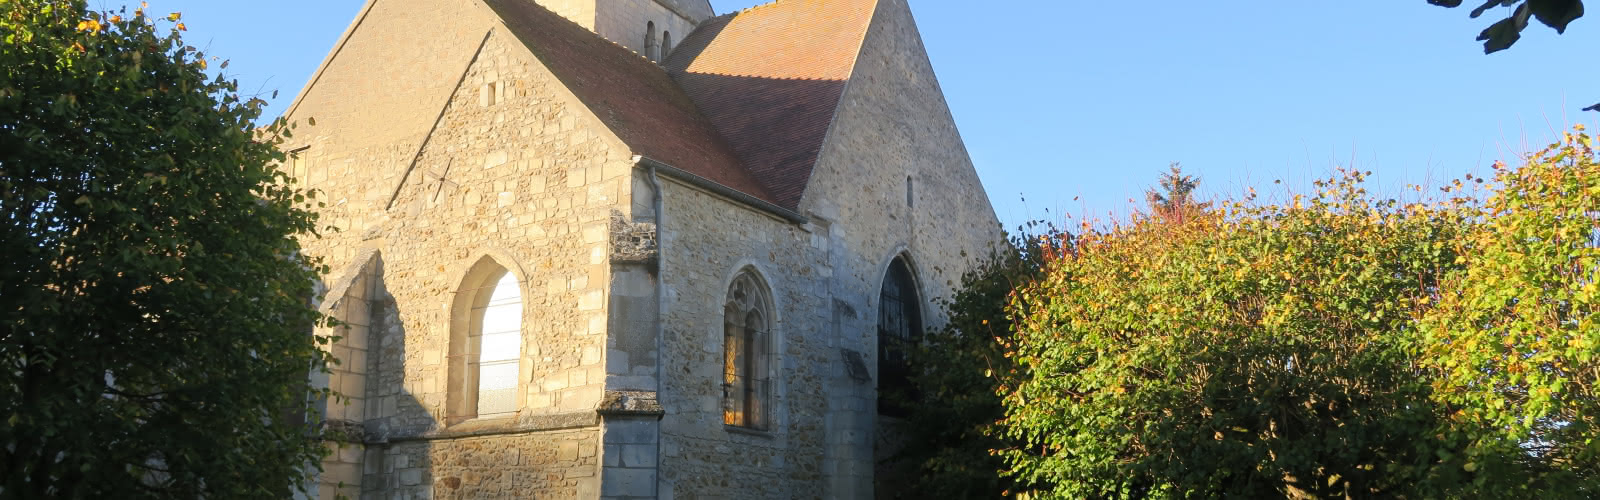 Eglise Saint-Aignan, Arthies